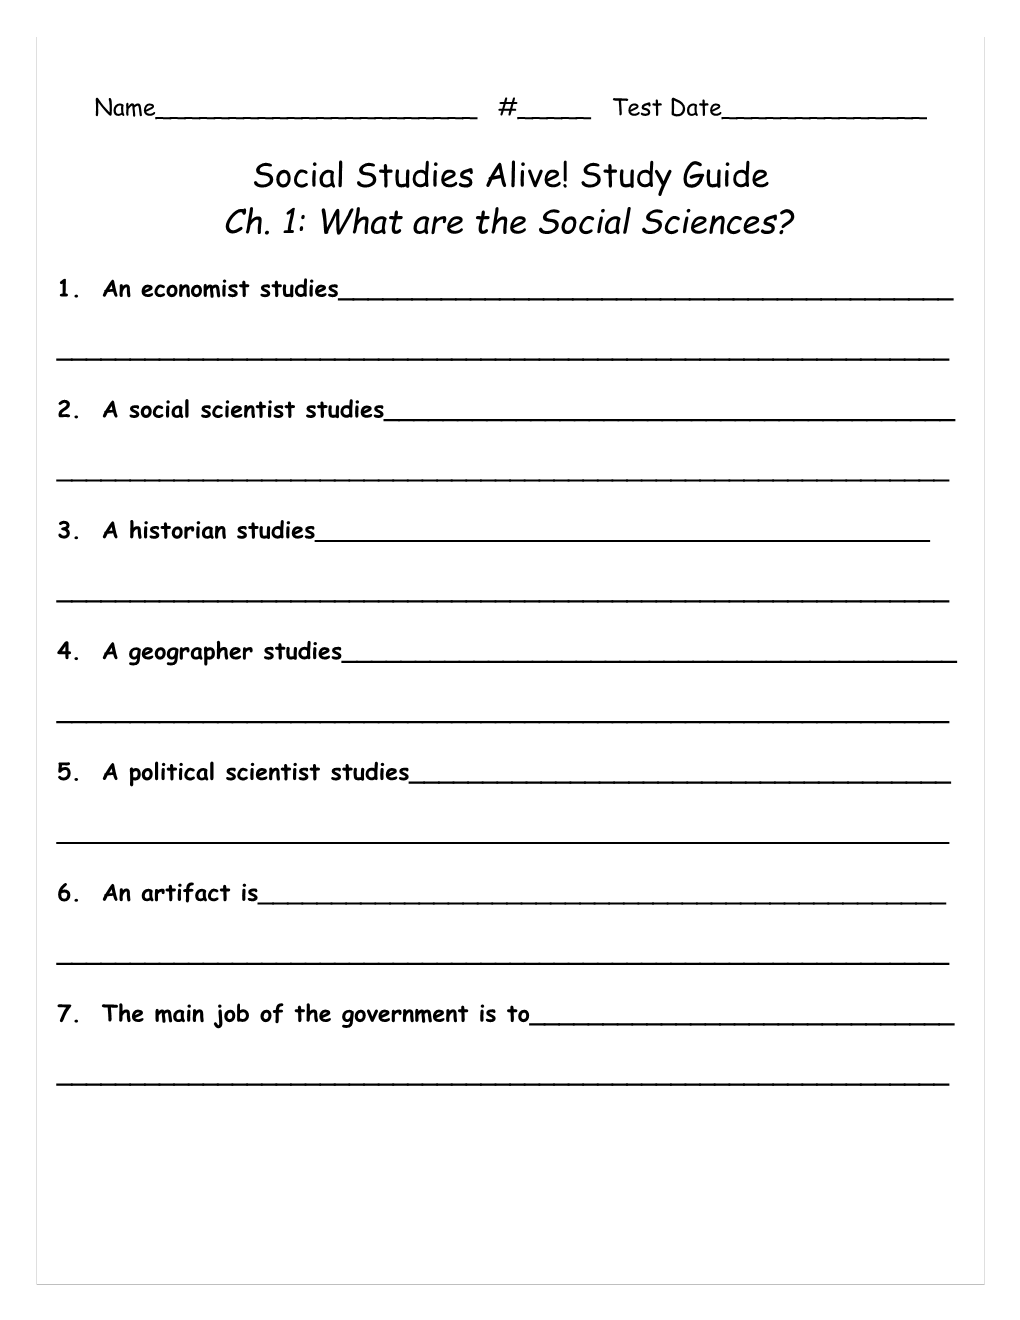 Social Studies Alive! Study Guide